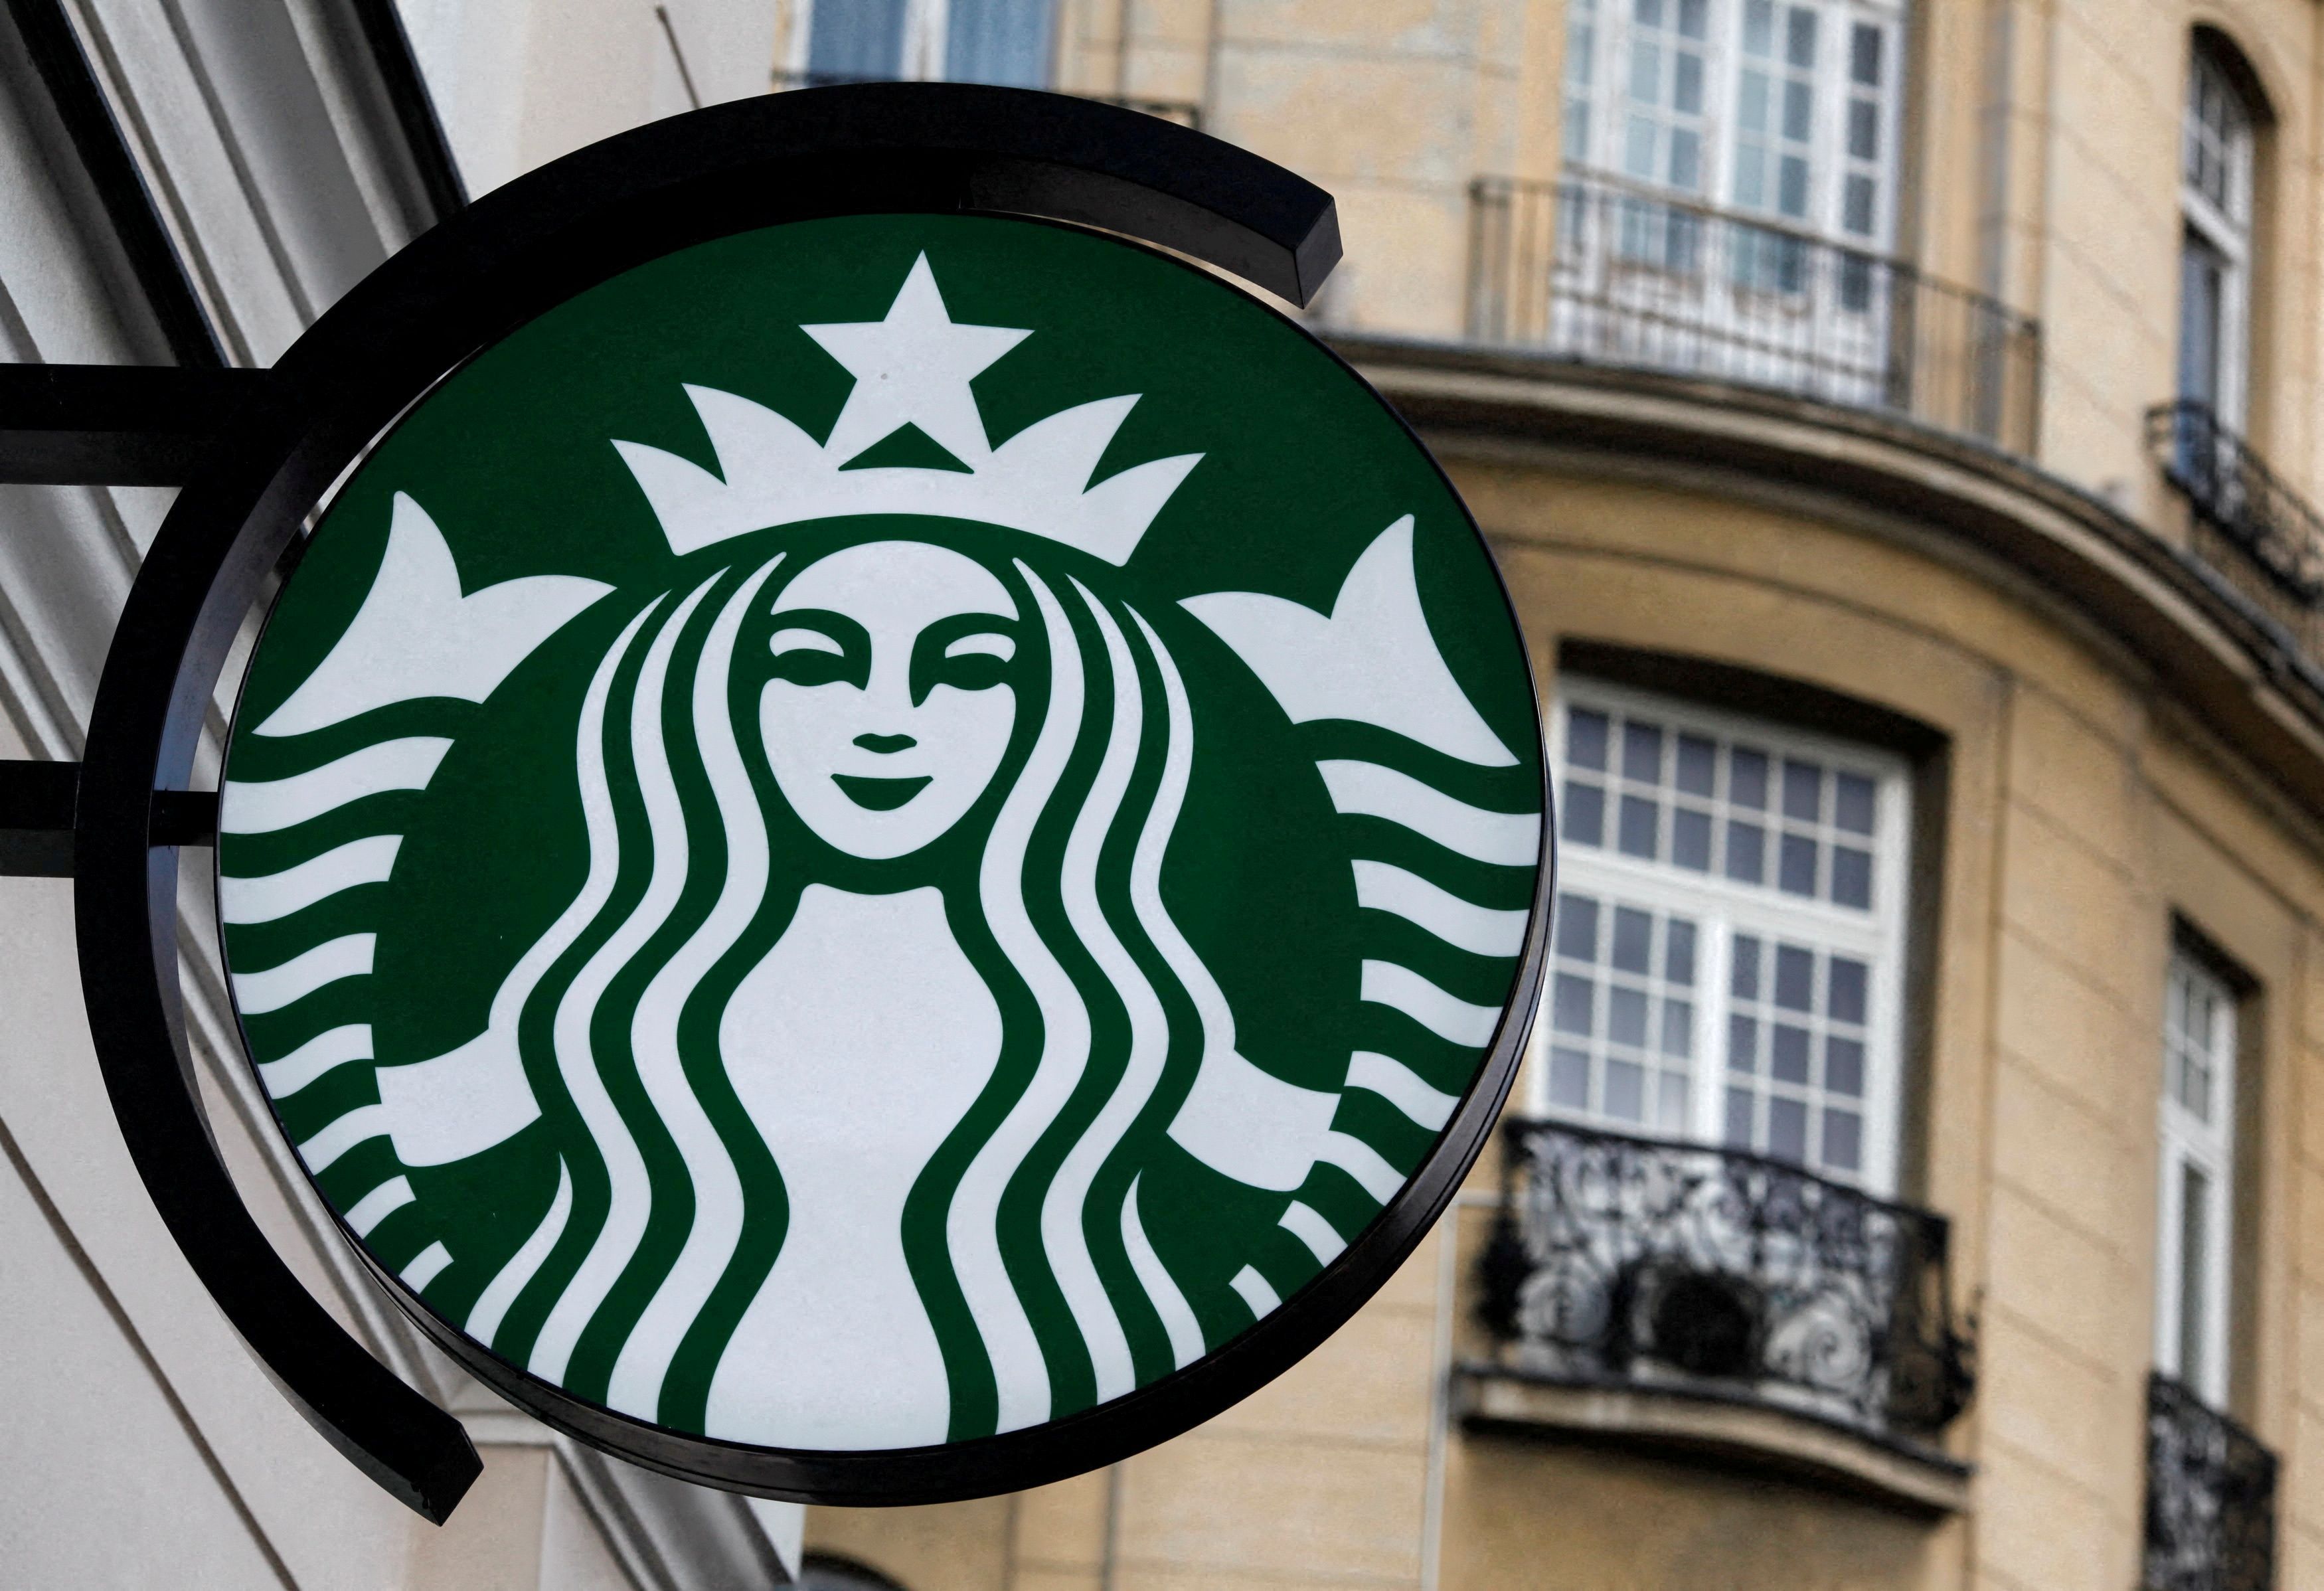 The Starbucks logo is seen outside a Starbucks cafe in Warsaw